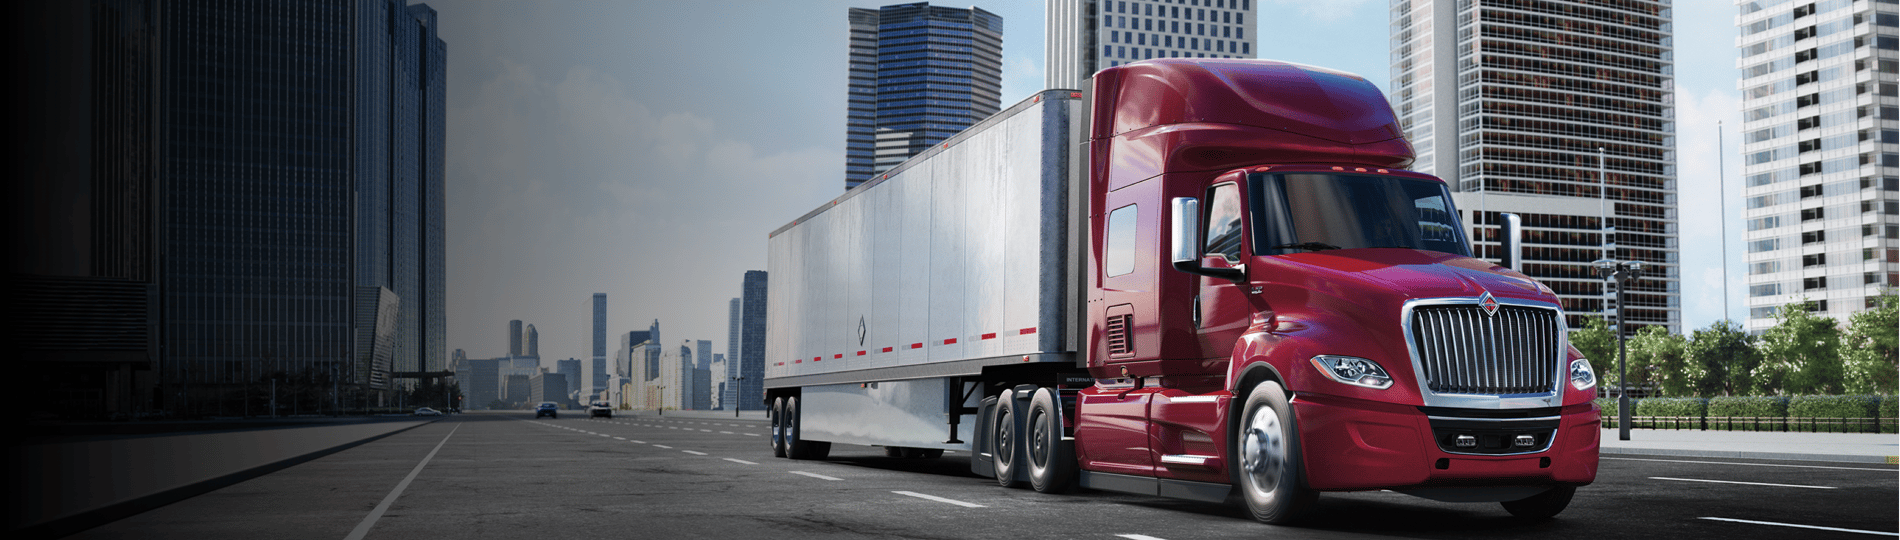 Fleet management solutions designed for your International Trucks